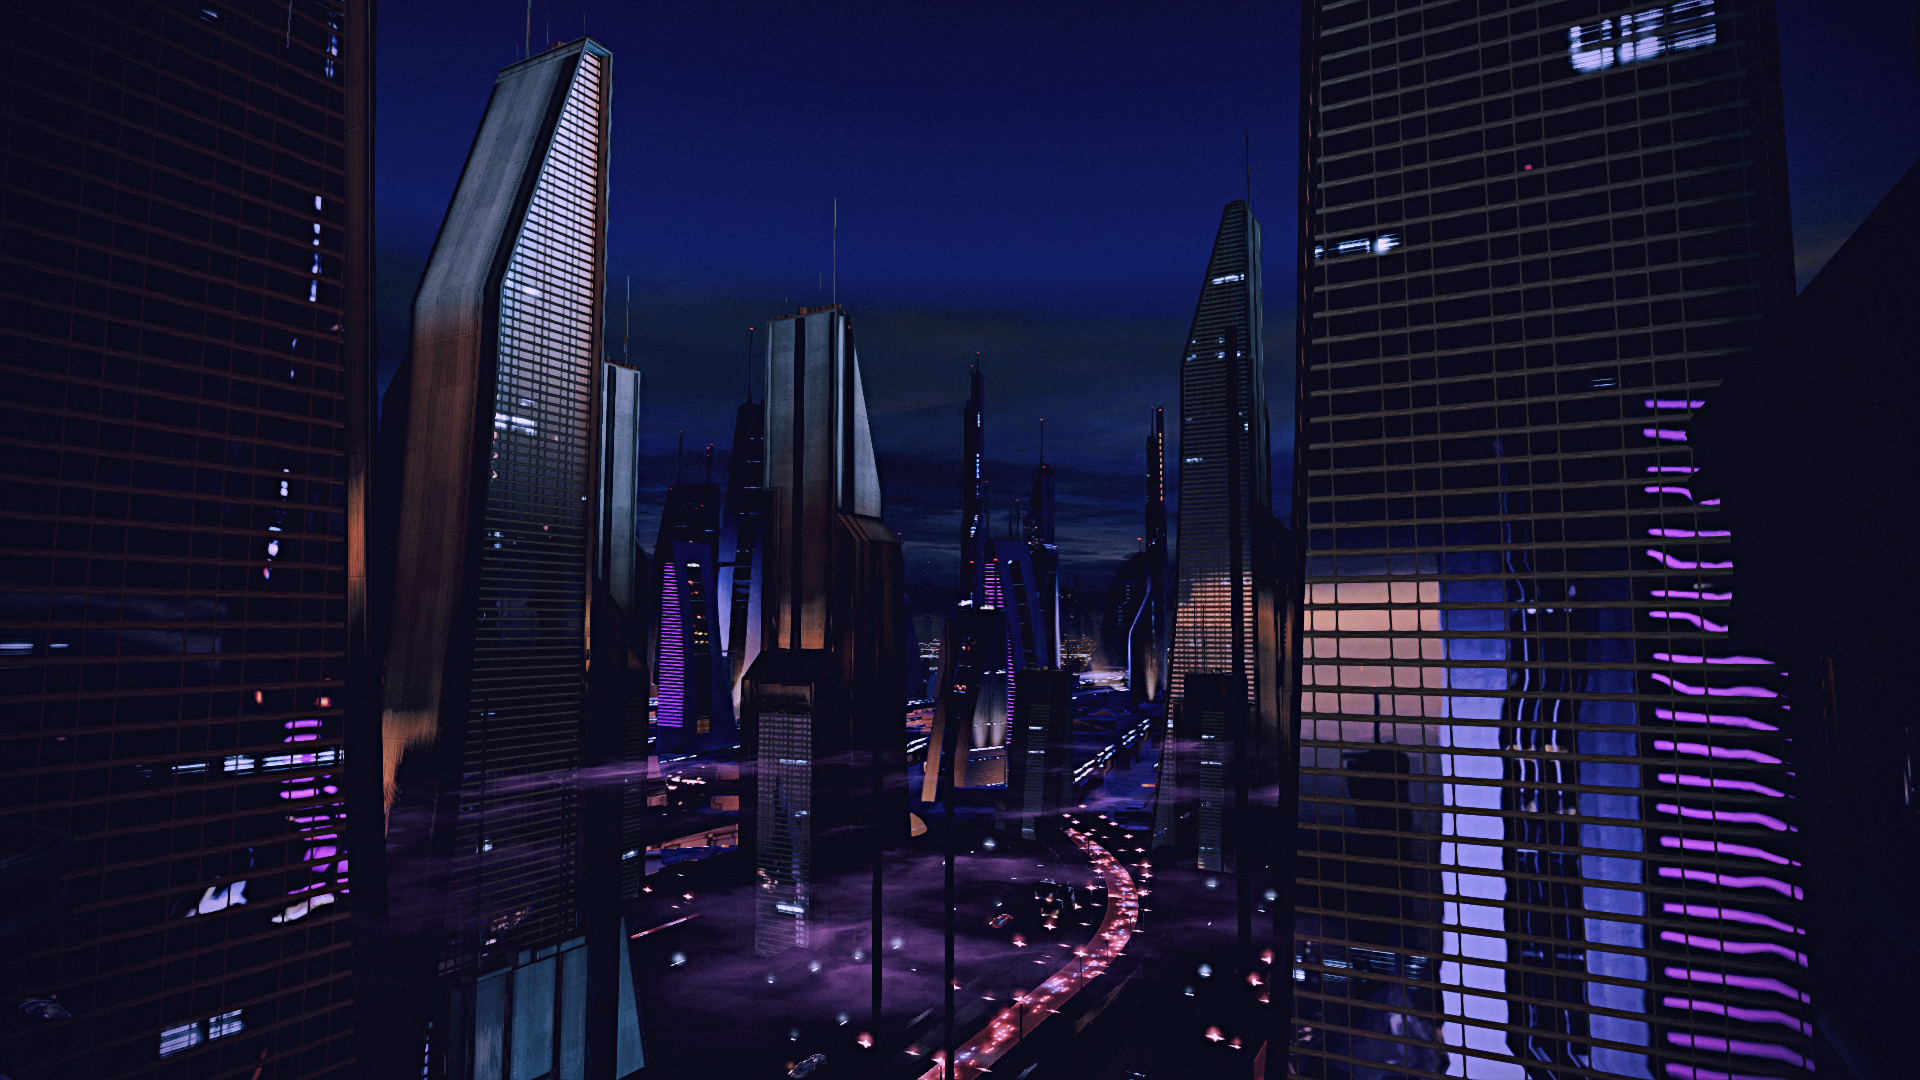 General 1920x1080 video games Mass Effect 2 Mass Effect: Legendary Edition futuristic city building lights night dark blue purple sky science fiction CGI video game art screen shot